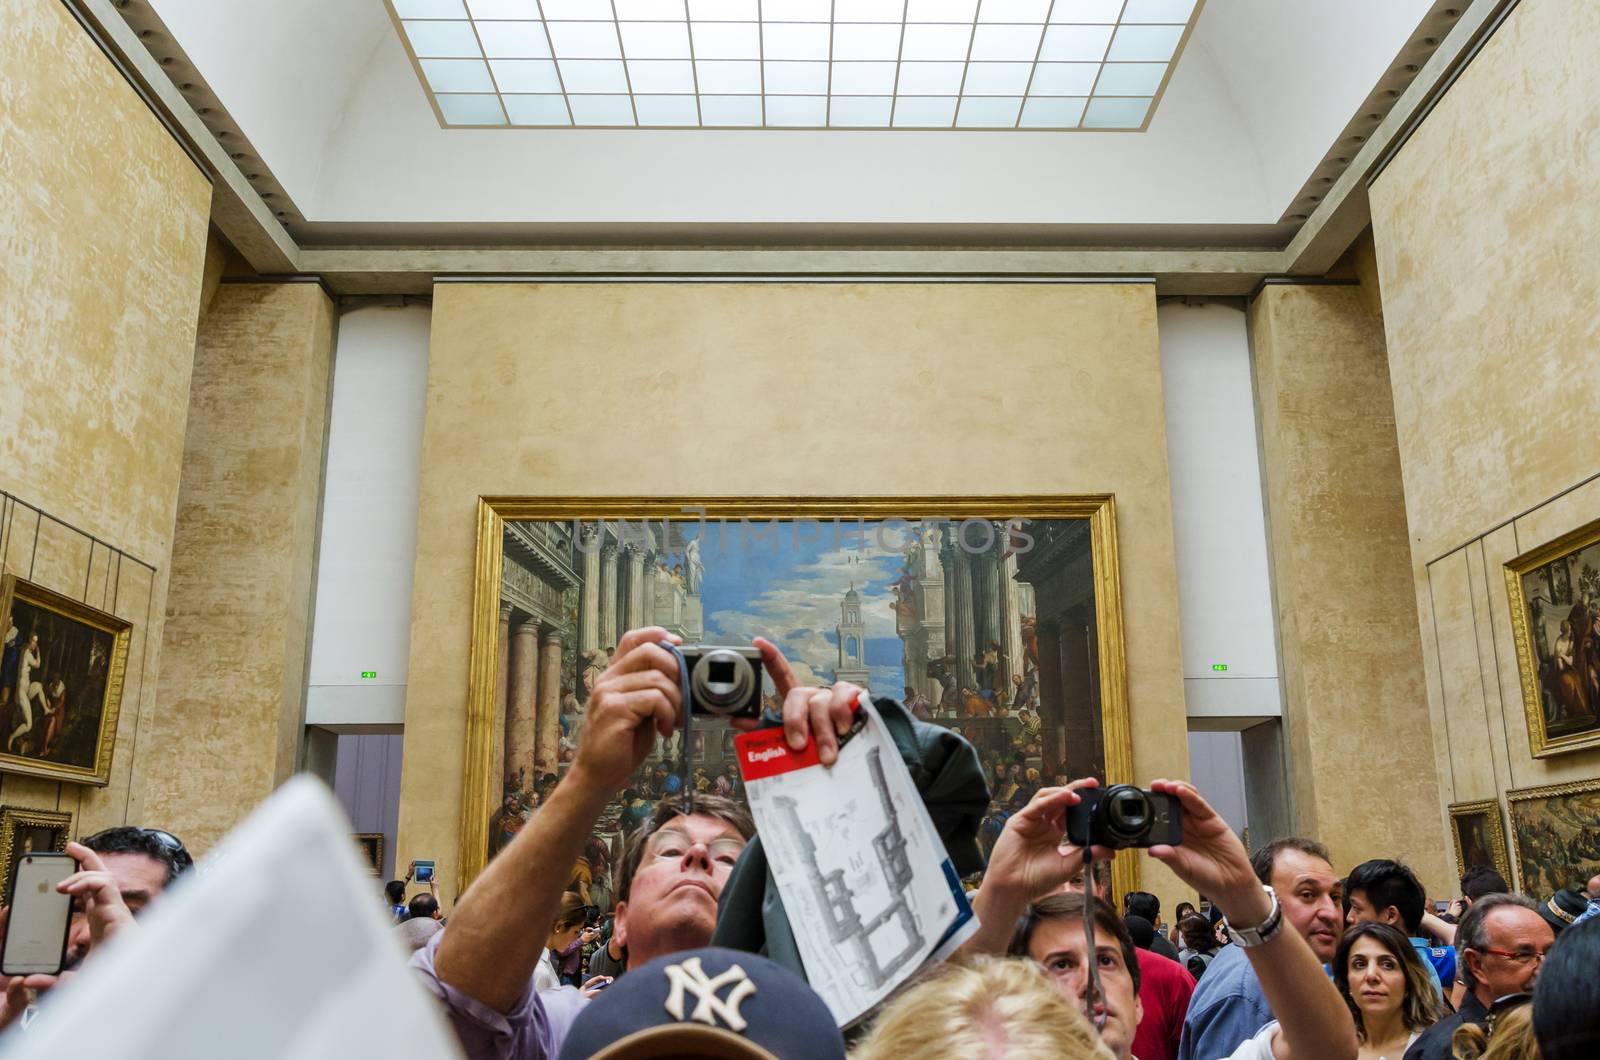 Paris, France - May 13, 2015: Visitors take photos of Leonardo DaVinci's "Mona Lisa" at the Louvre Museum by siraanamwong